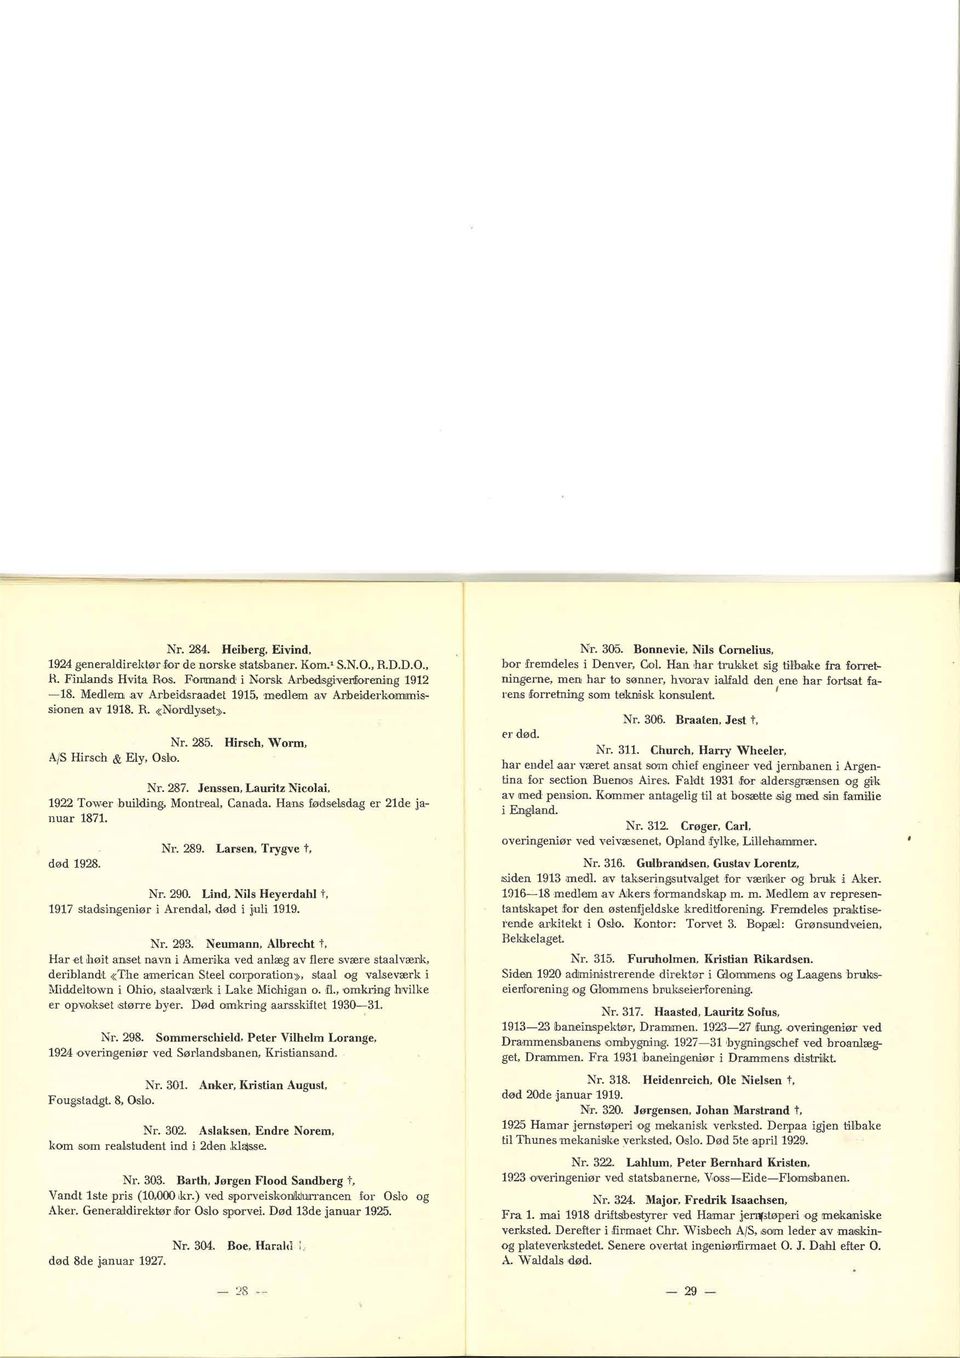 Jenssen, Lauritz Nicolai, 1922 Tower buil:ding, Montæal, Canada. Hans fødselsdag er 21de januar 1871. død 1928. Nr. 289. Larsen, Trygve t, Nr. 290.